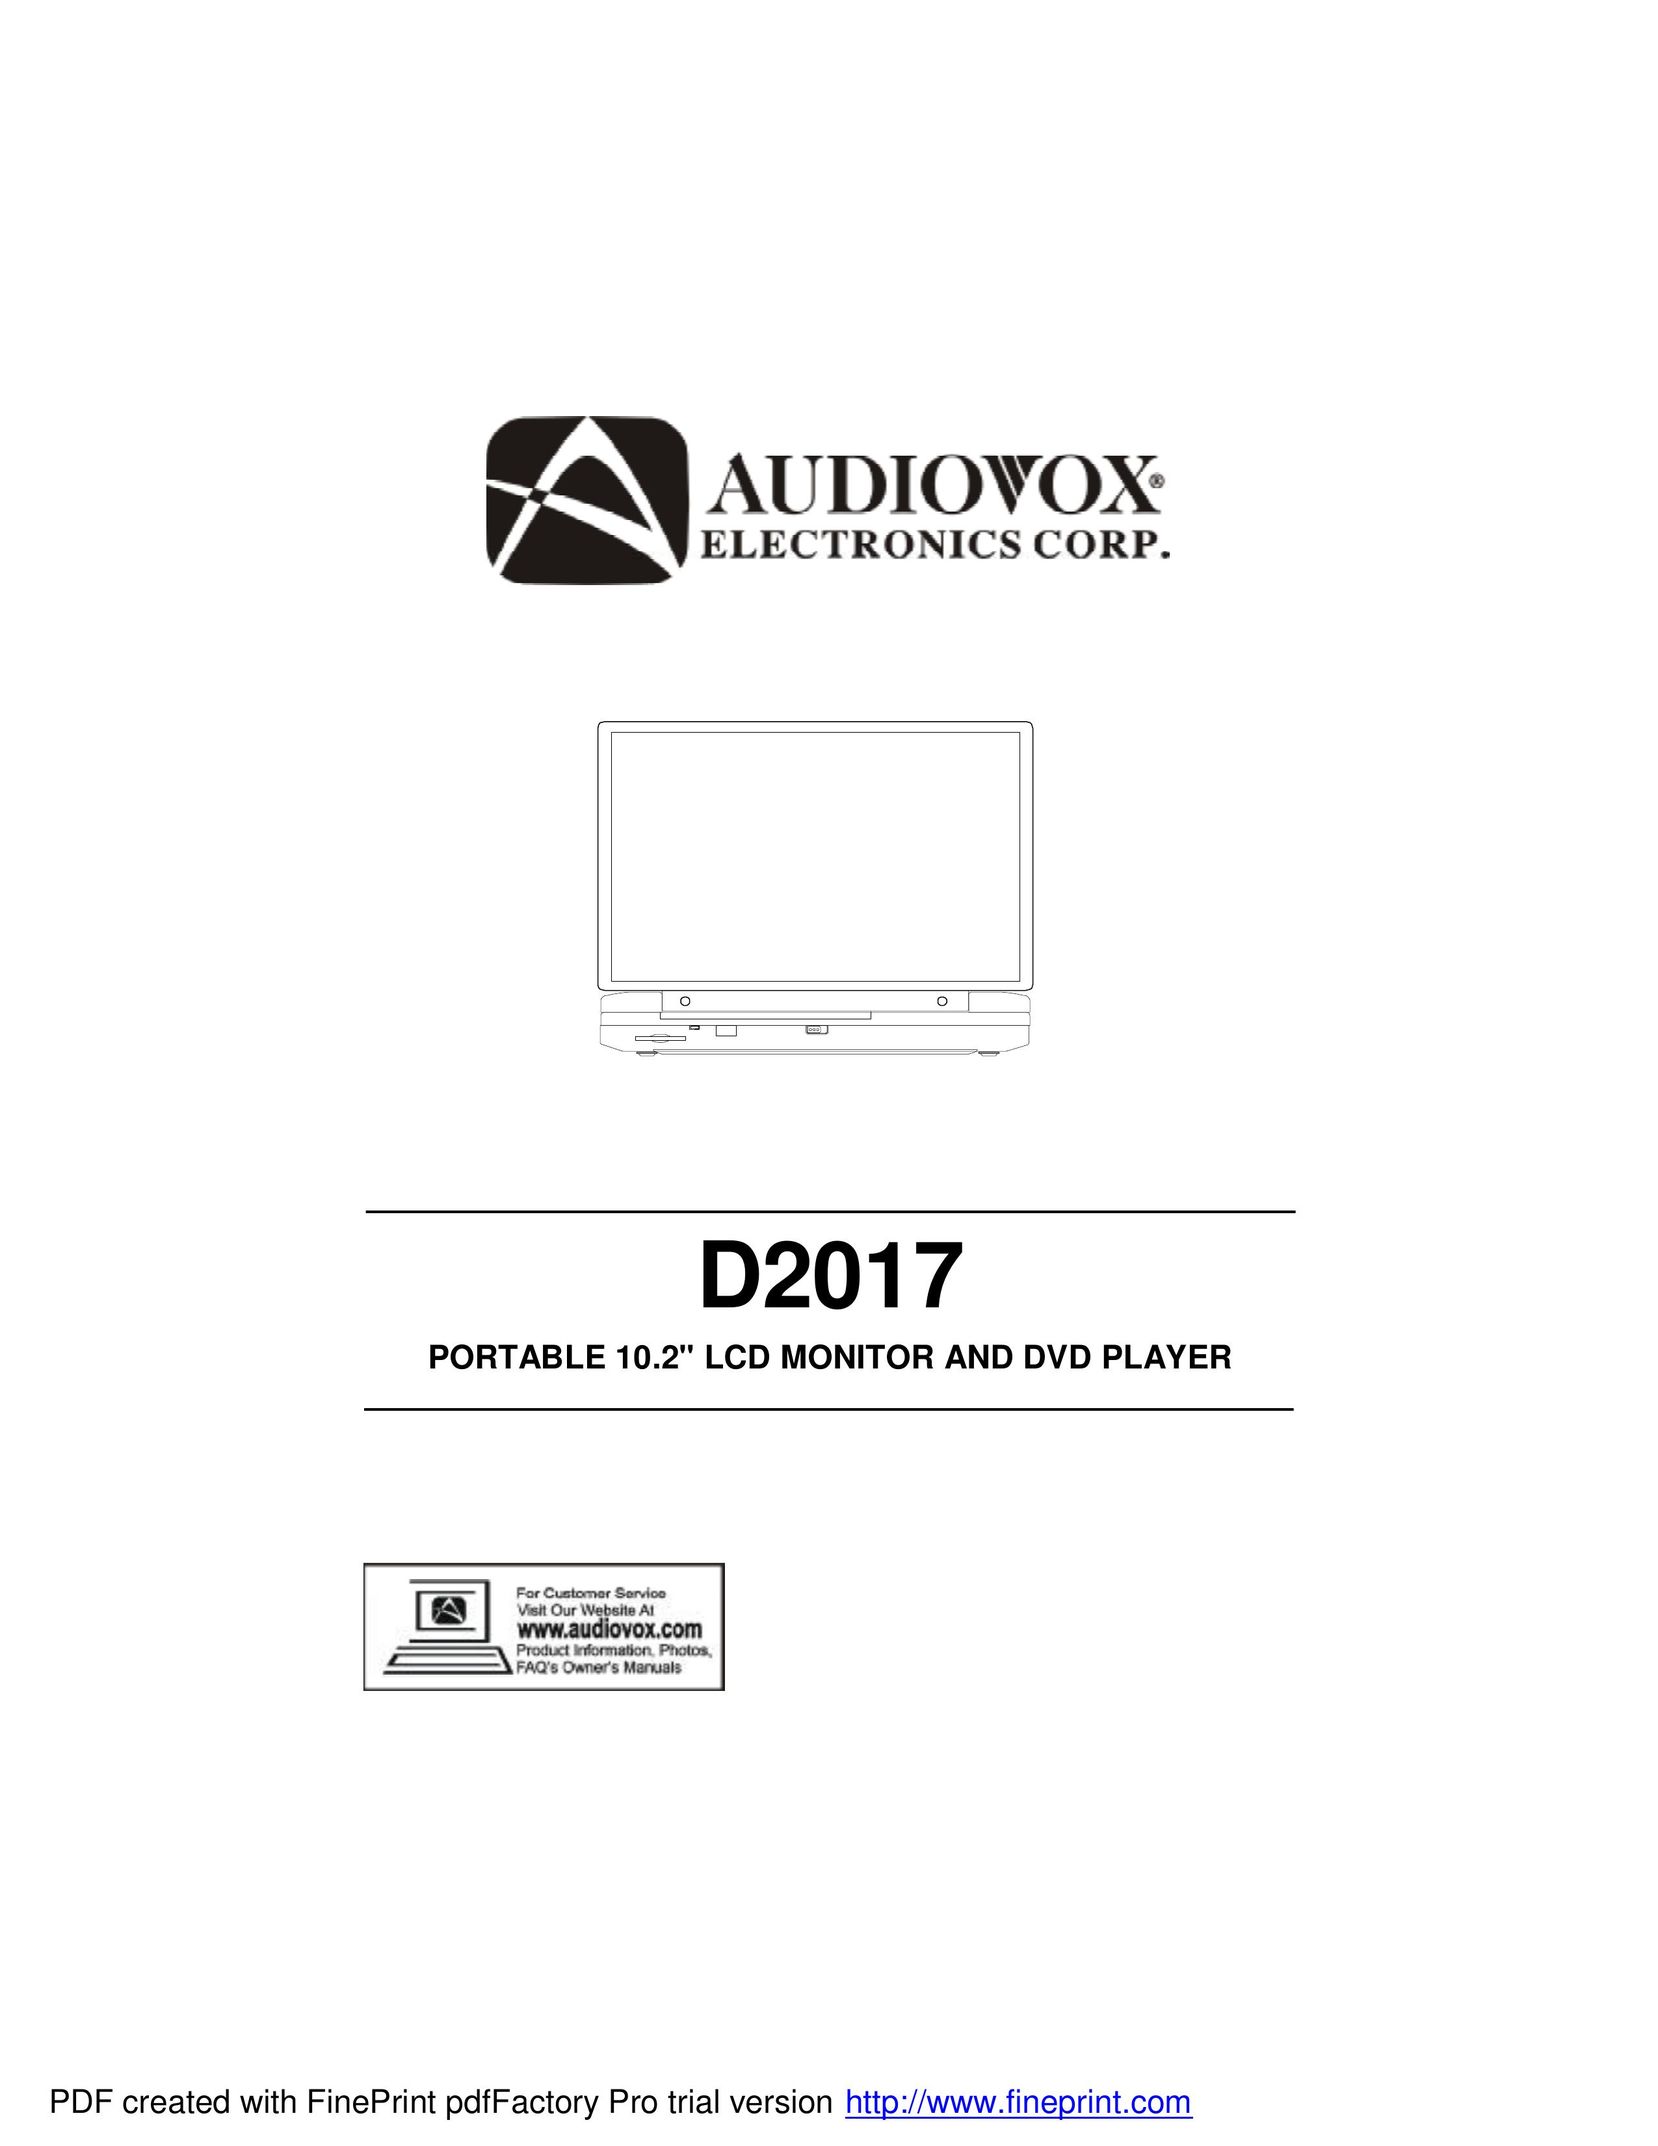 Audiovox D2017 DVD Player User Manual